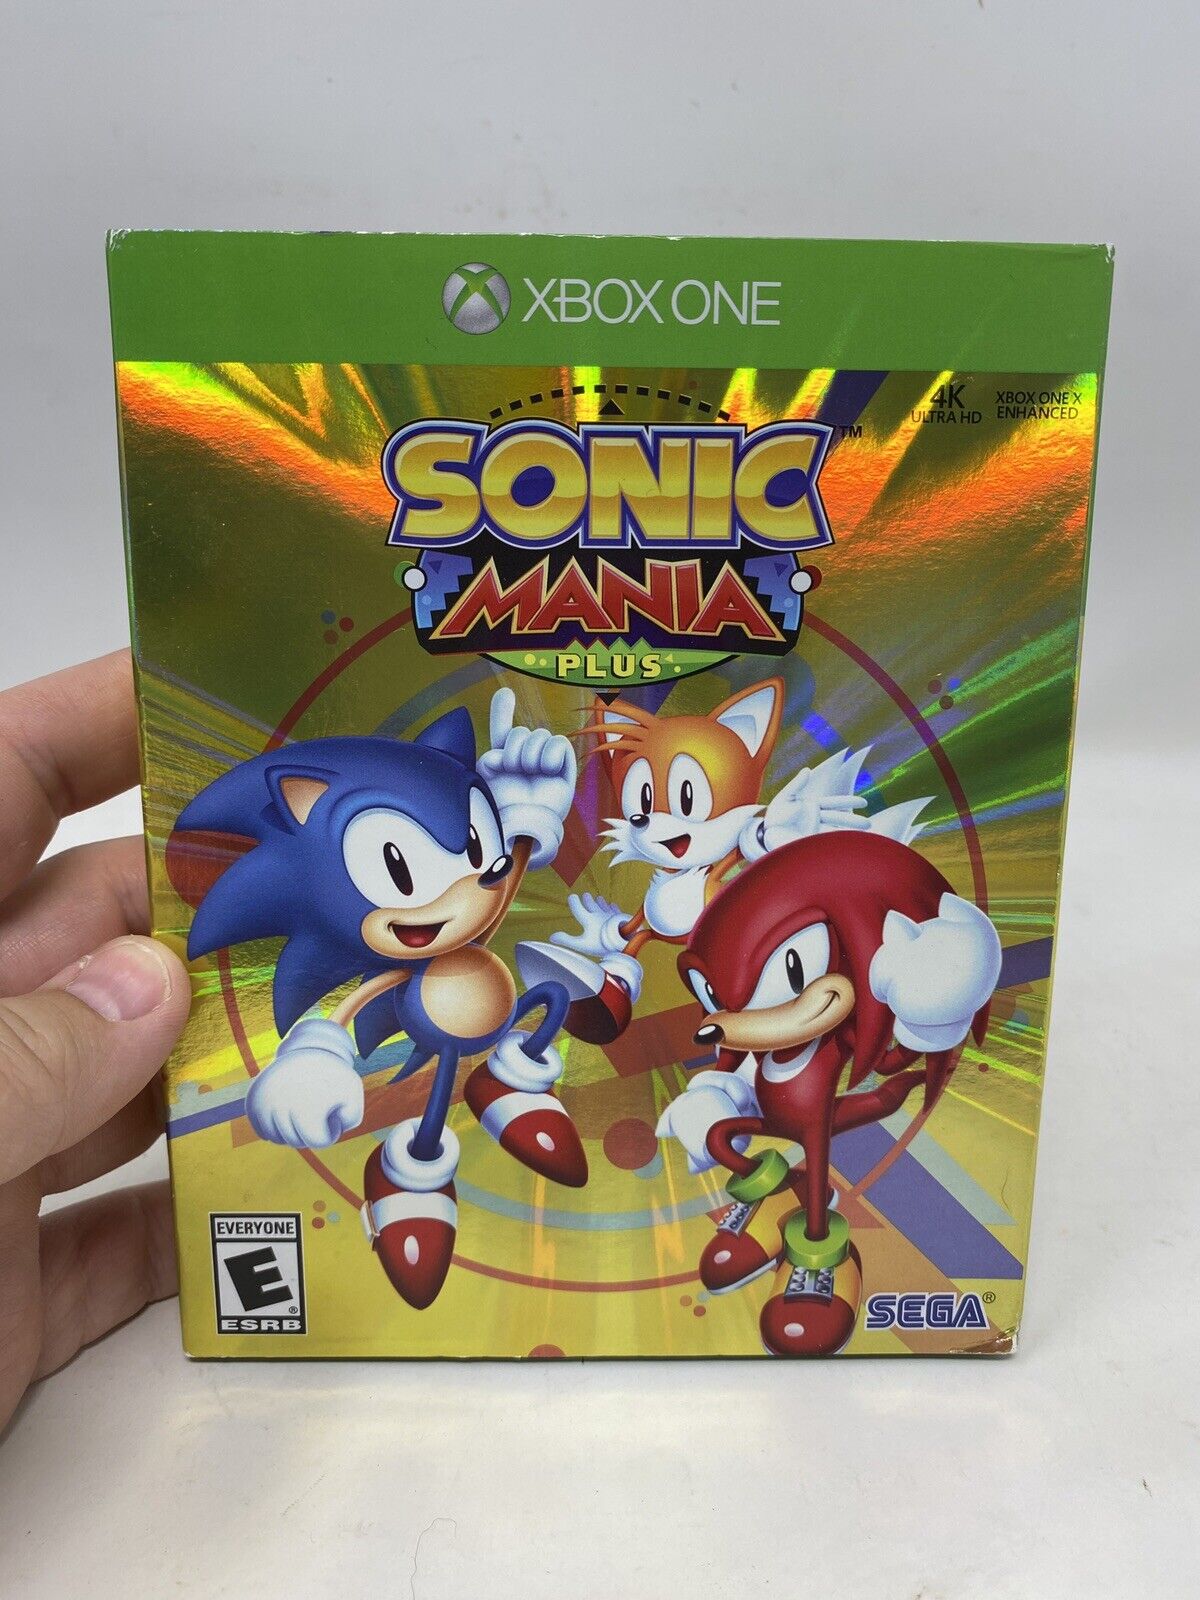 Sonic Mania Plus - Xbox One Launch Edition w/ Art Book + Cover CIB